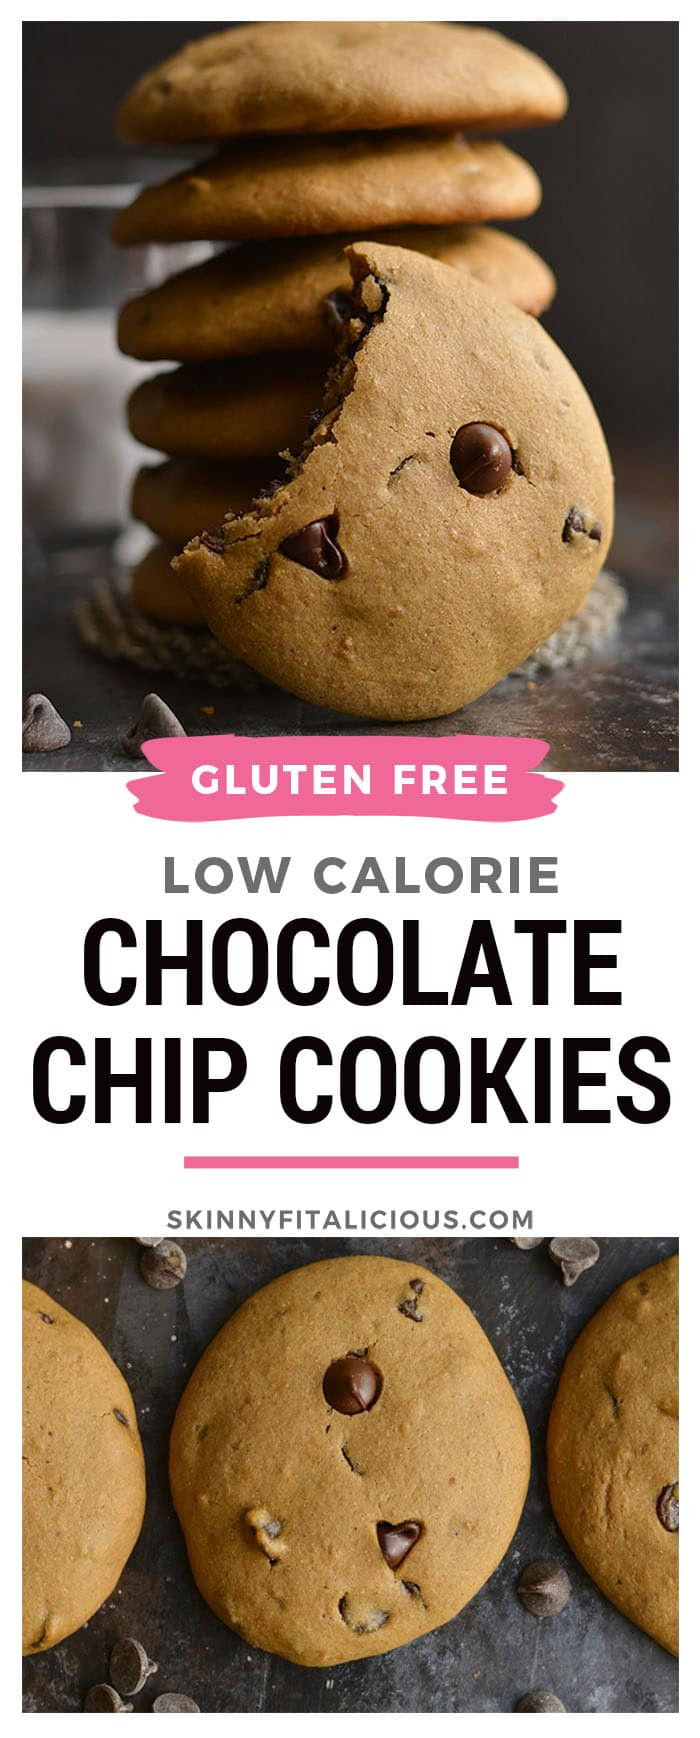 Low Calorie Chocolate Chip Cookies
 Low Calorie Gluten Free Chocolate Chip Cookies Skinny